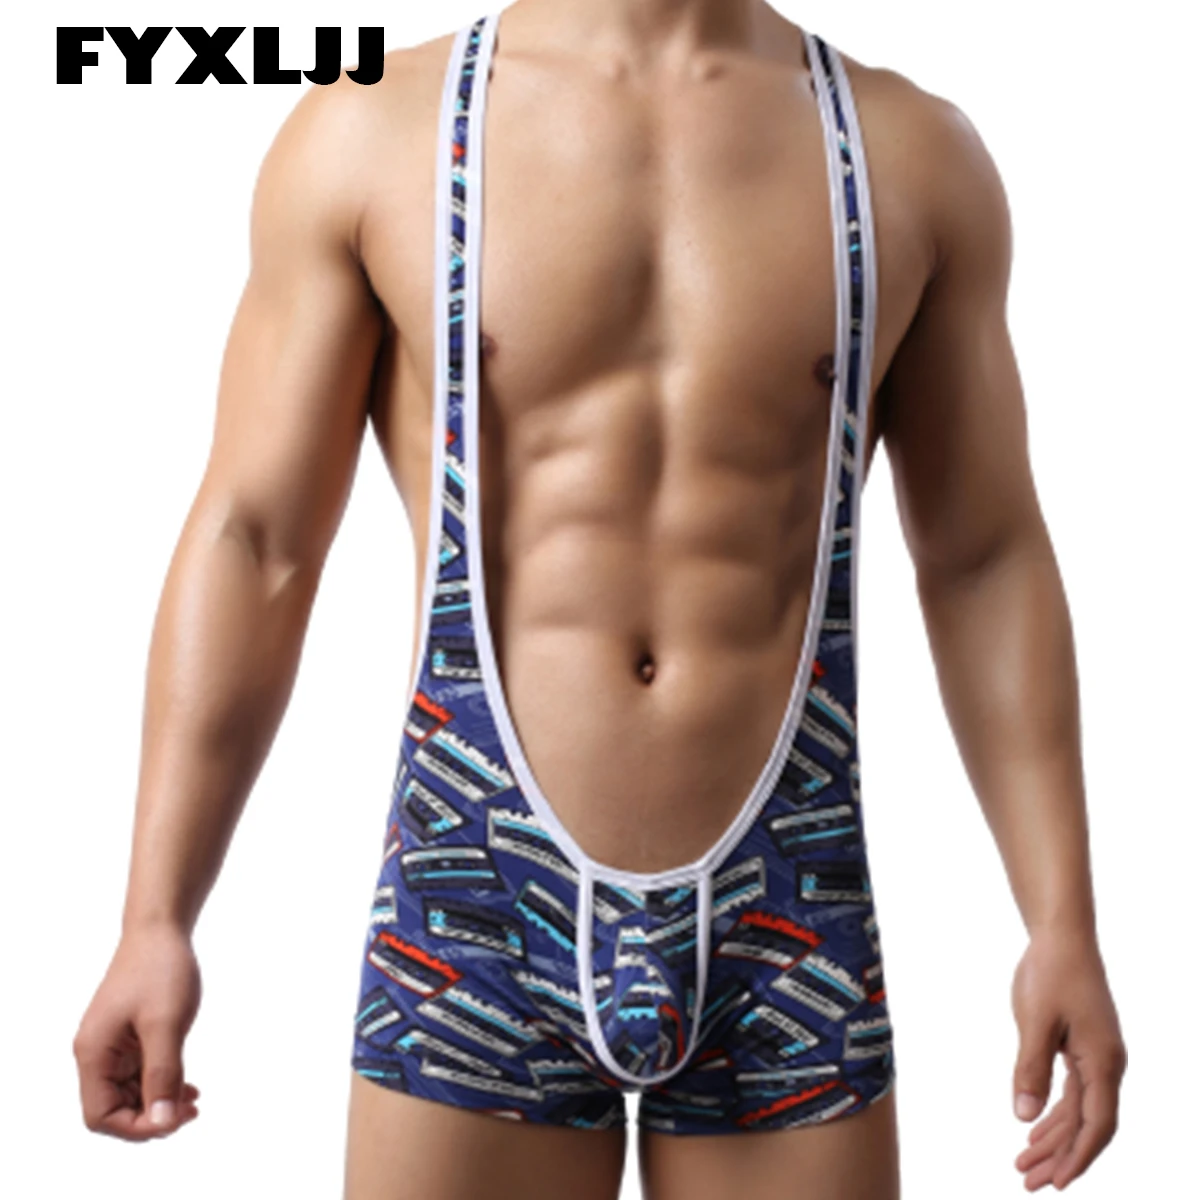 

FYXLJJ Sexy Mens Undershirt One-piece Wrestling Singlet Leotard Bodysuits Soft Printed Bodysuit Sexy Tank Tops Men Undershirts